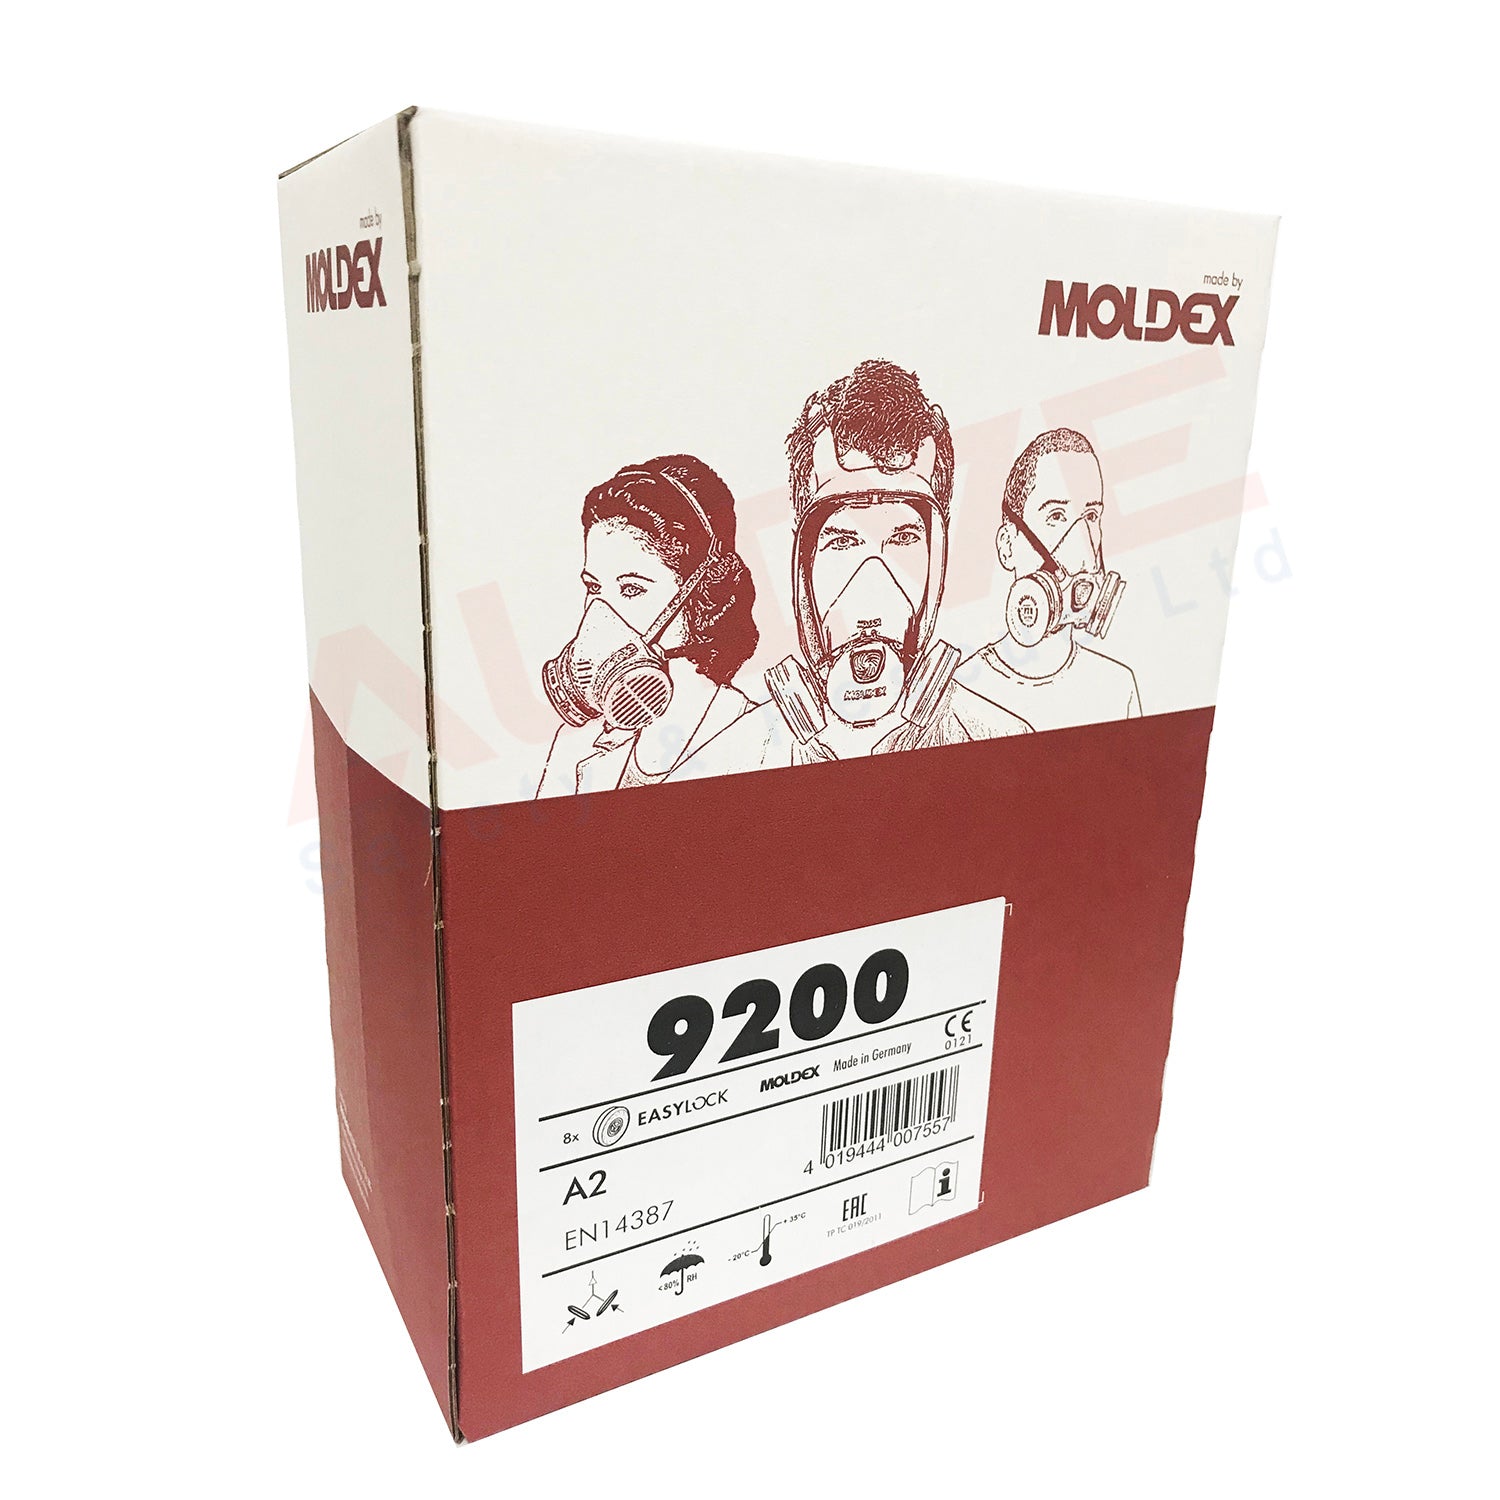 Moldex 9200 A2 Easylock Gas Filters Box